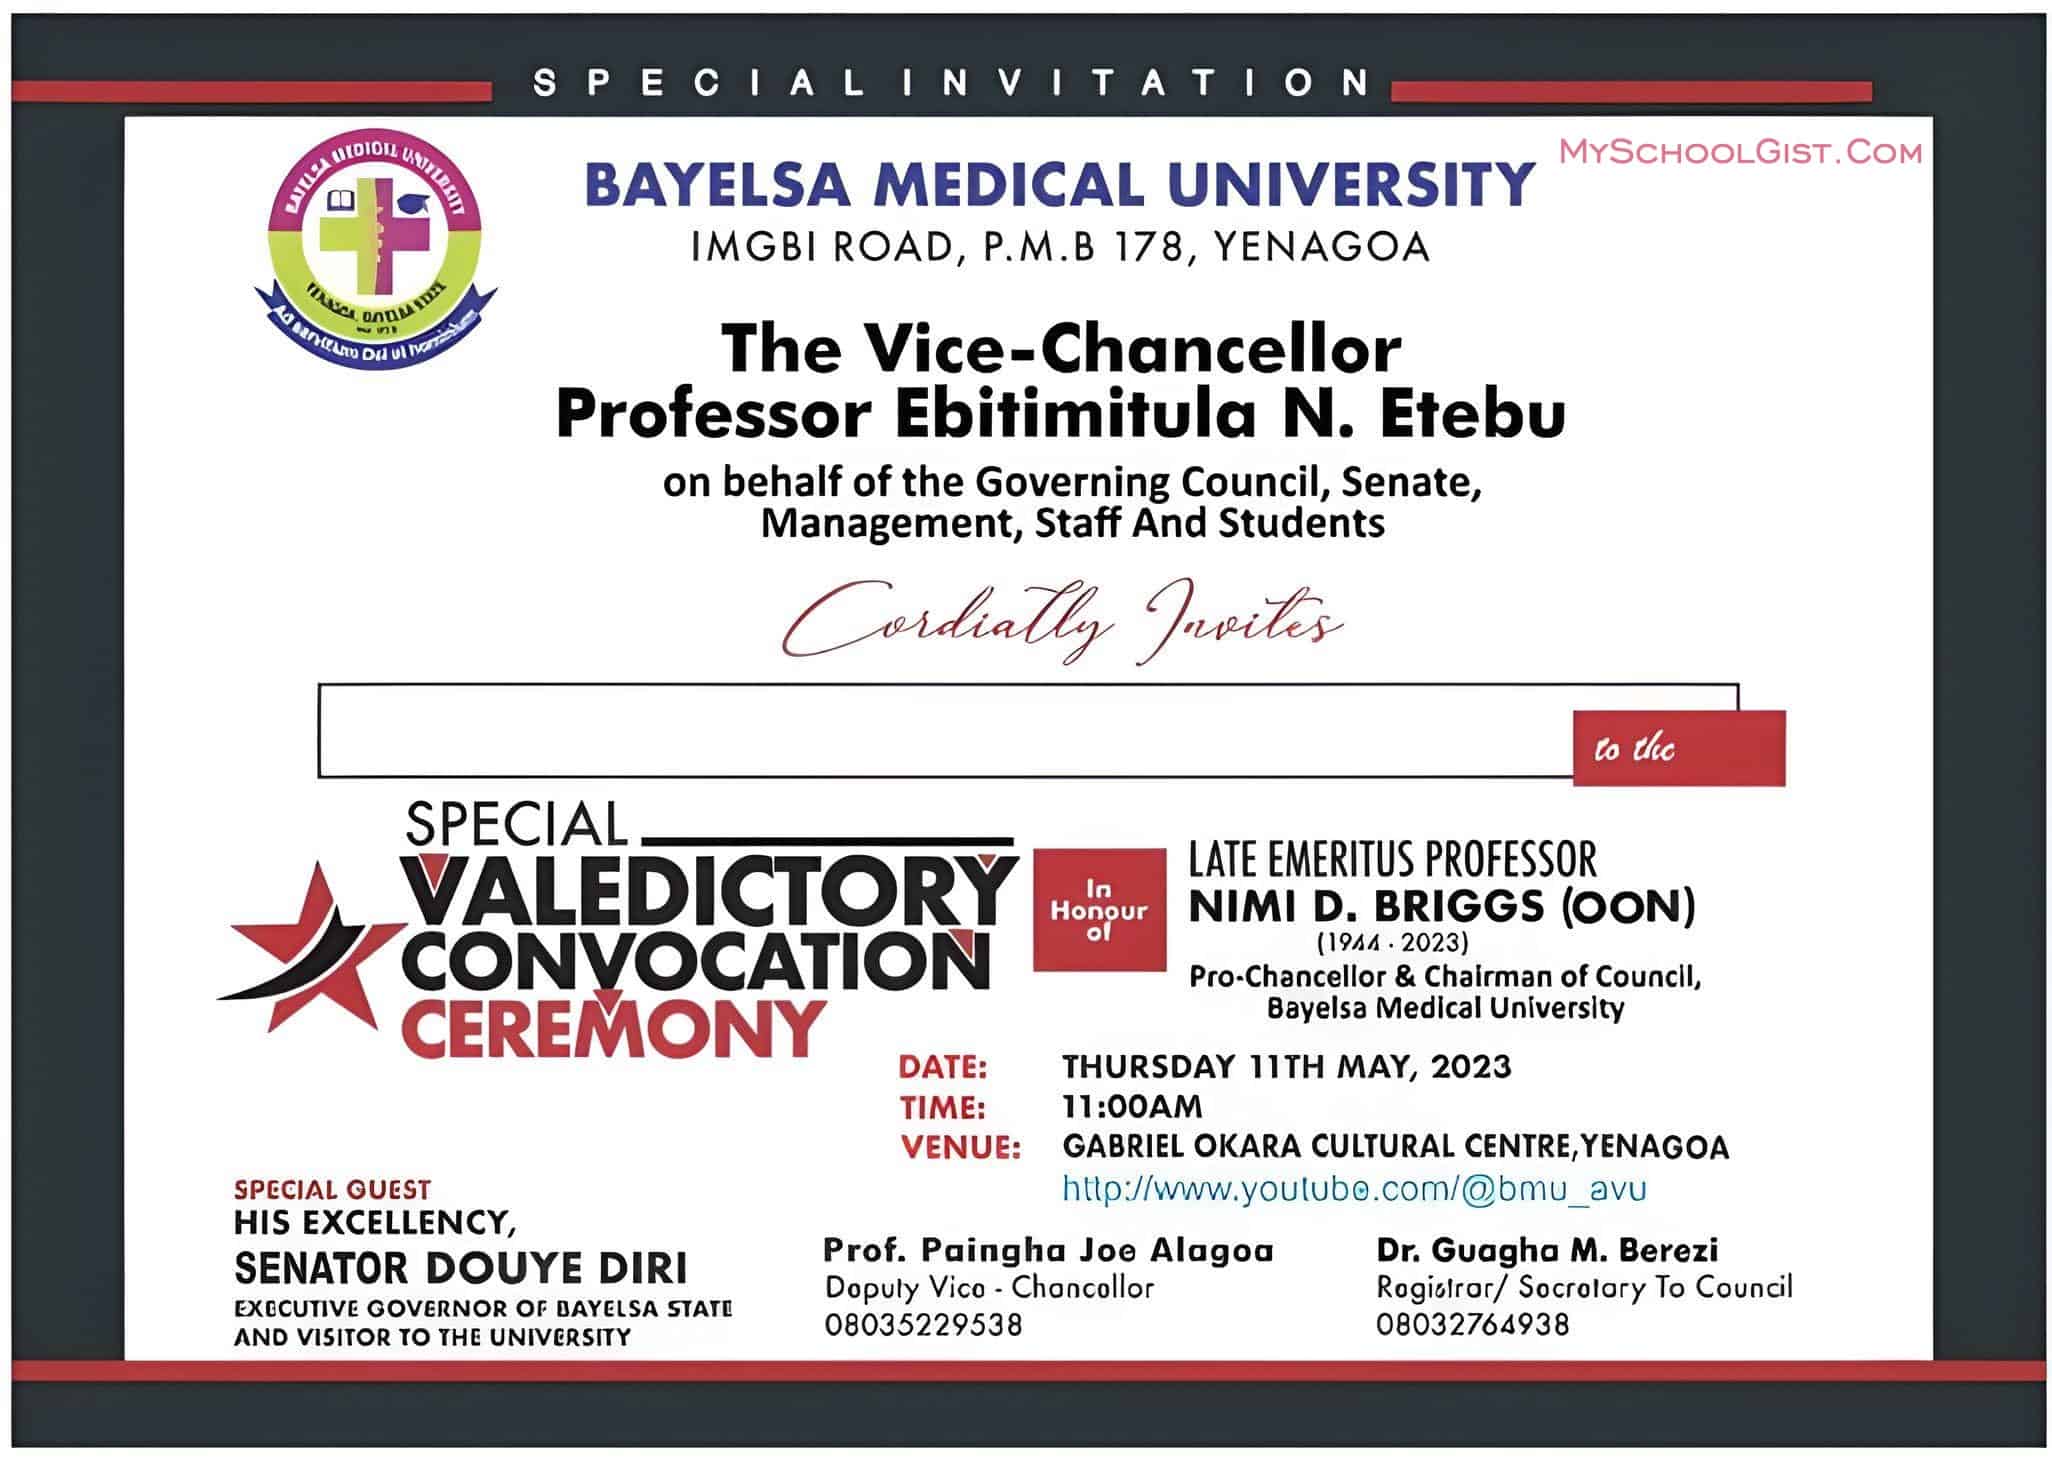 Bayelsa Medical University Special Valedictory Convocation Ceremony